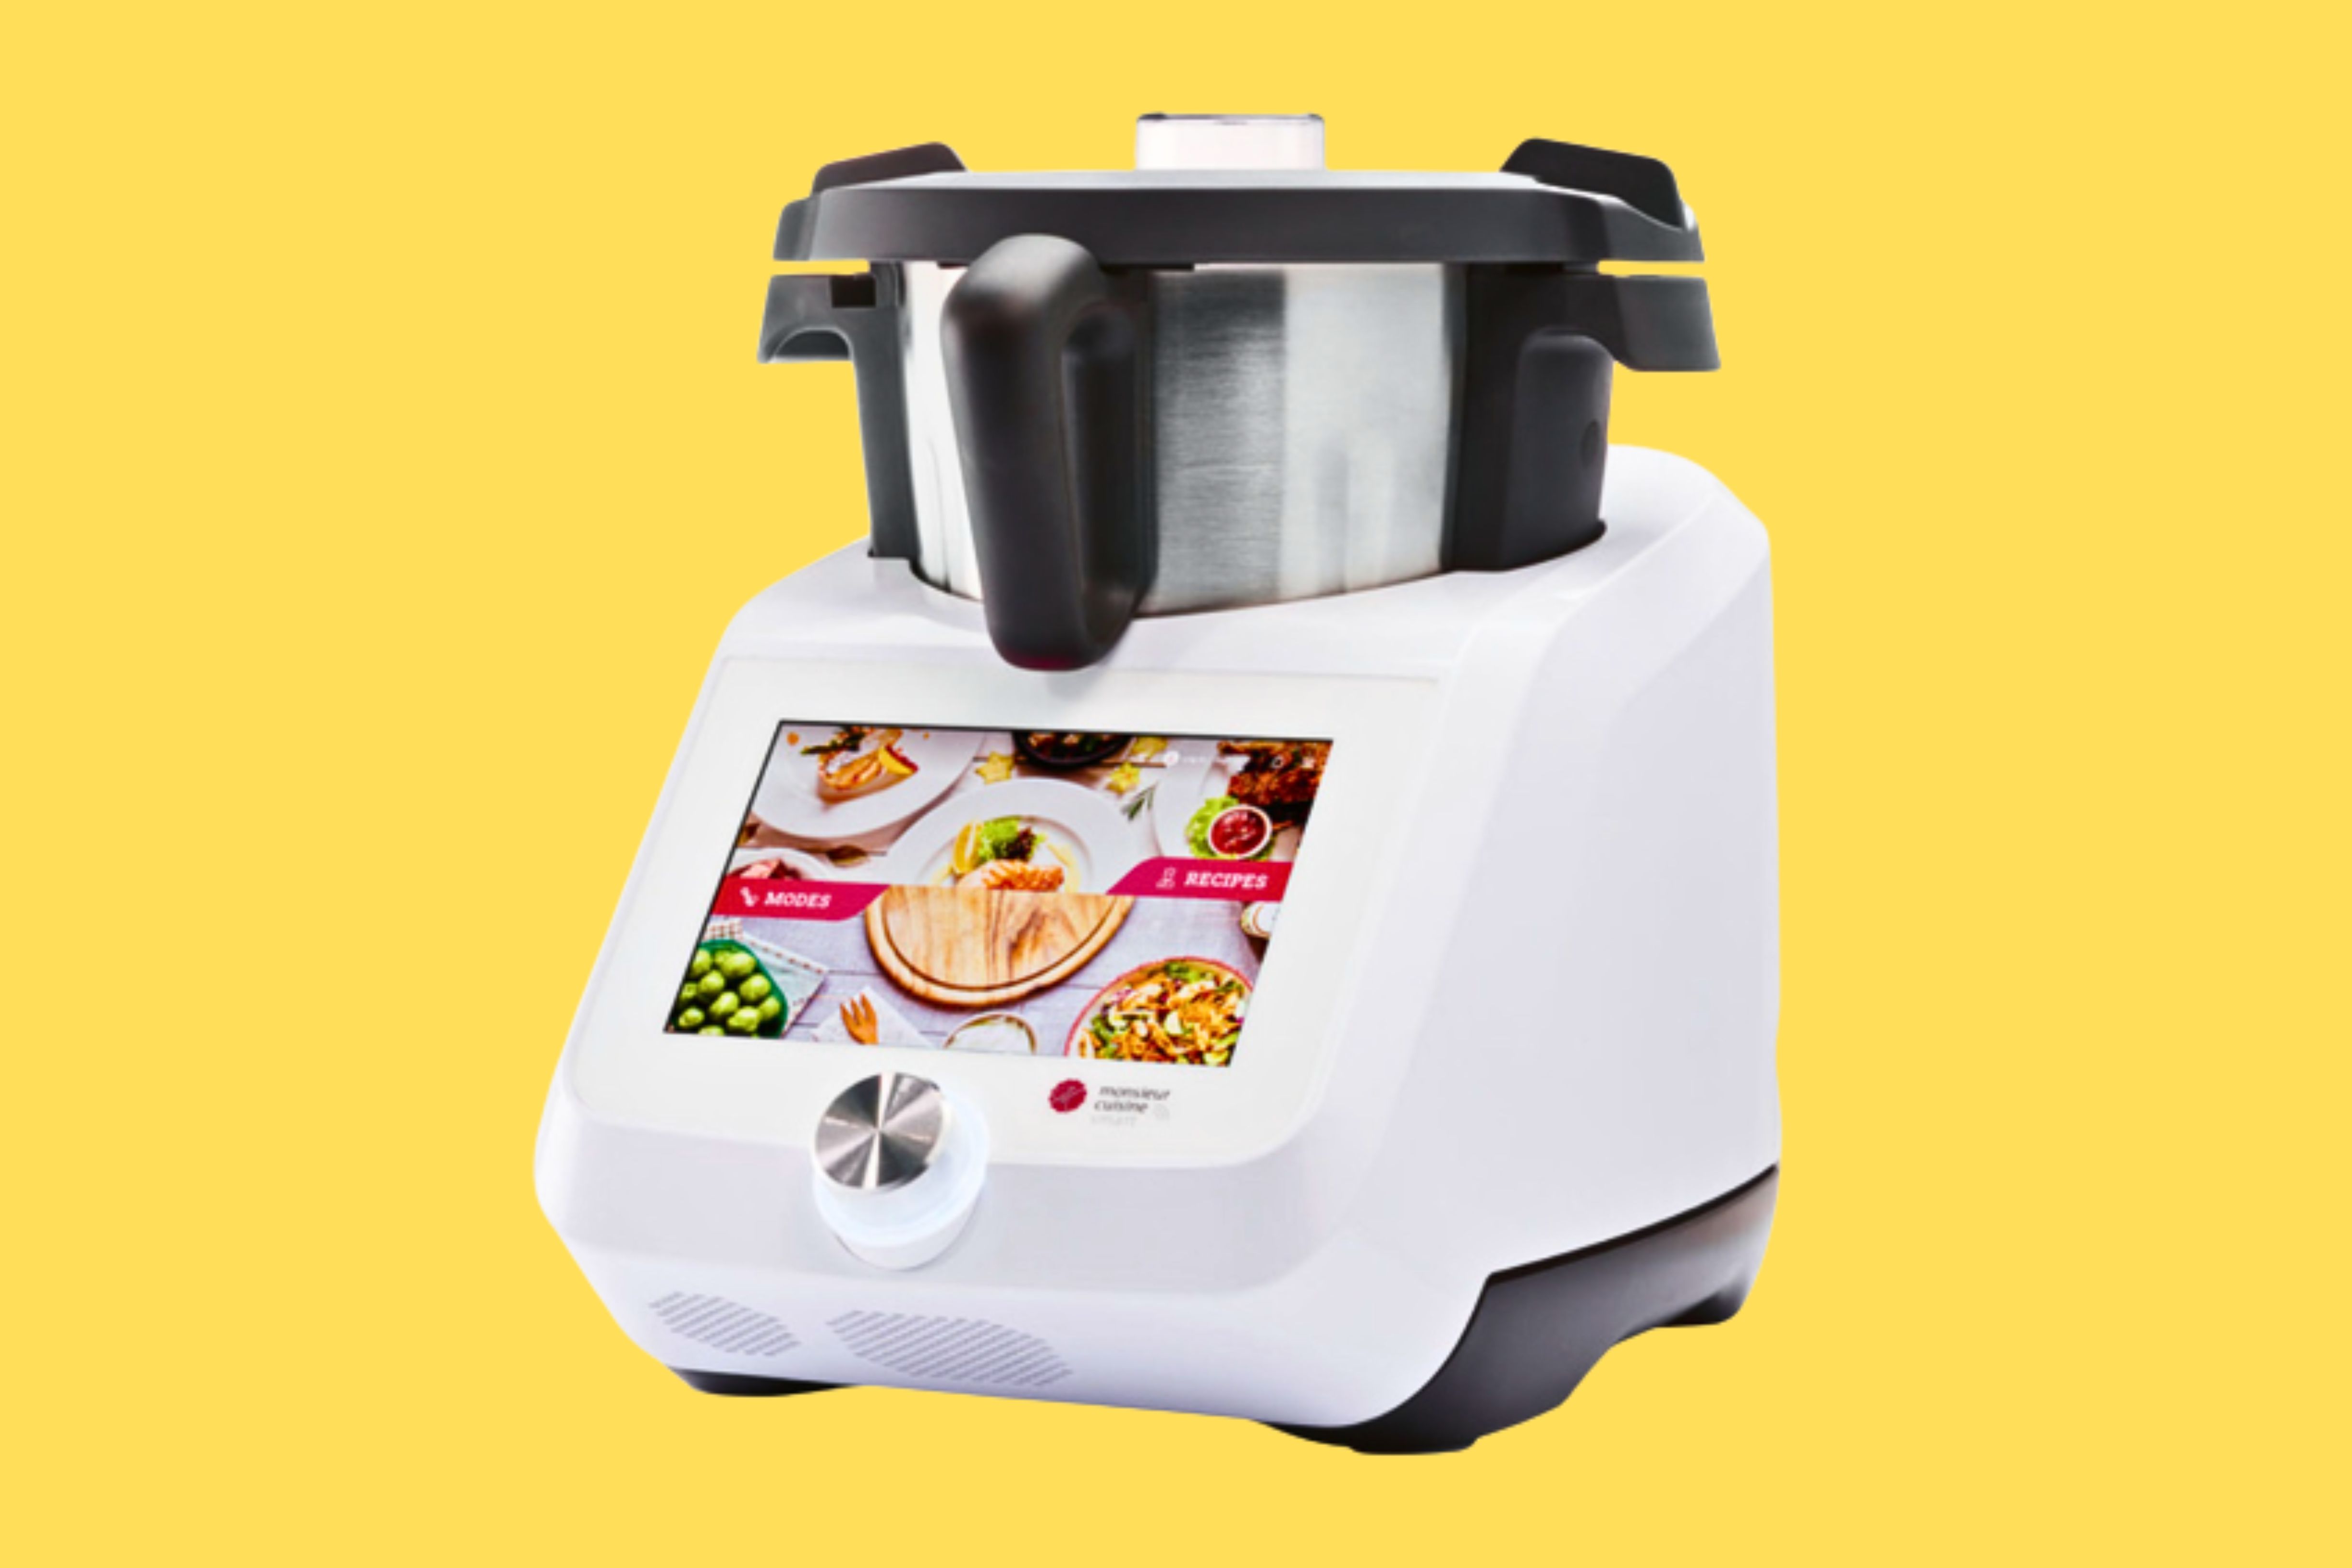 Robot Monsieur Cuisine Smart © Shutterstock